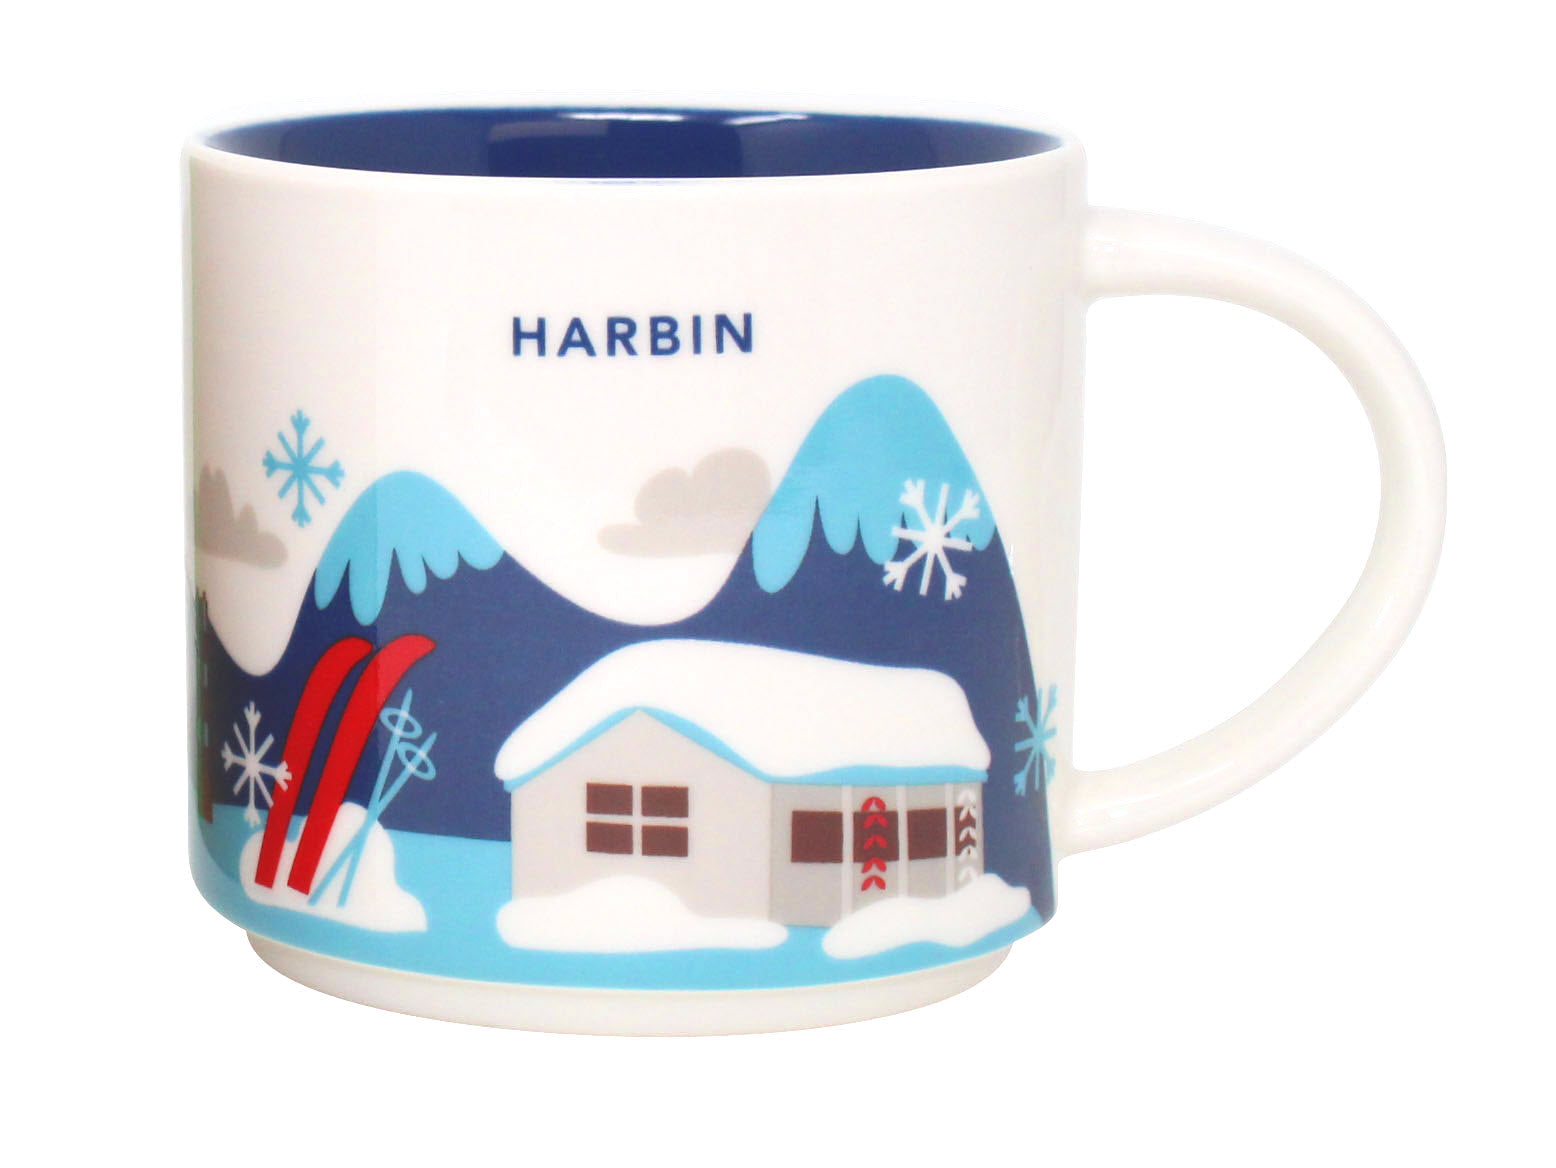 Starbucks You Are Here Series Harbin Ceramic Mug, 14 Oz